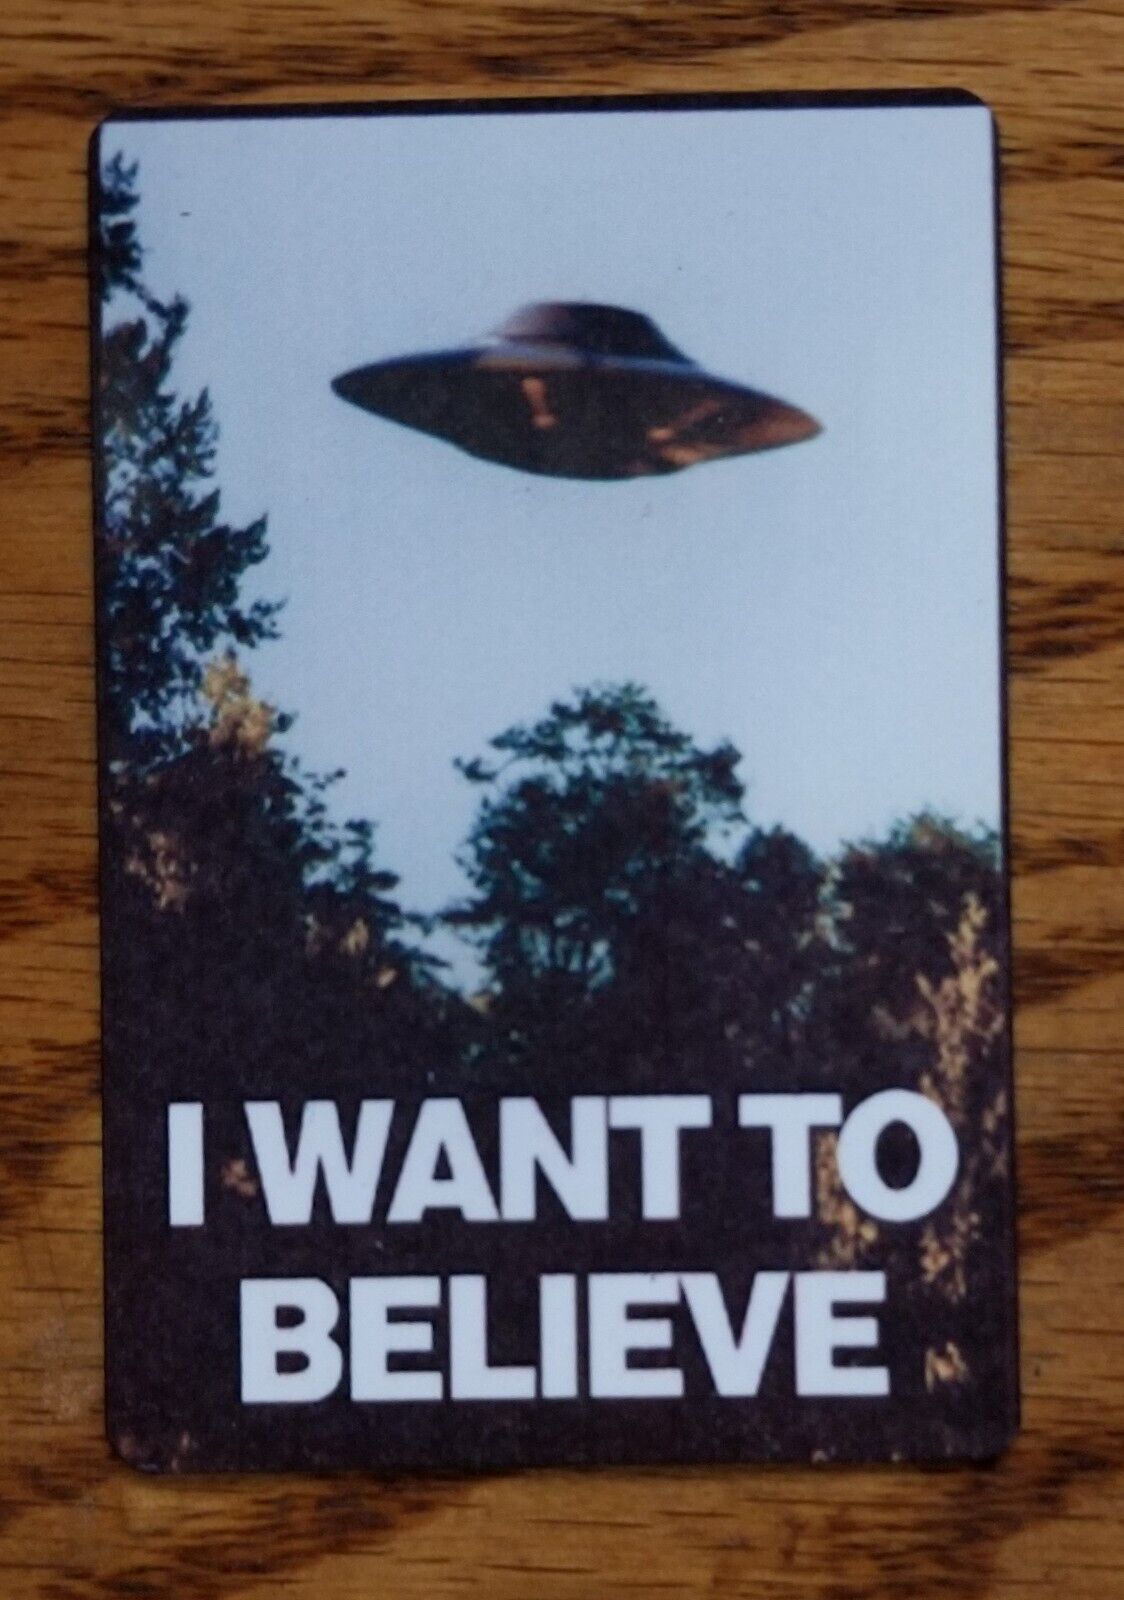 I want to believe x-files alien life ufo 2x3 refrigerator fridge magnet